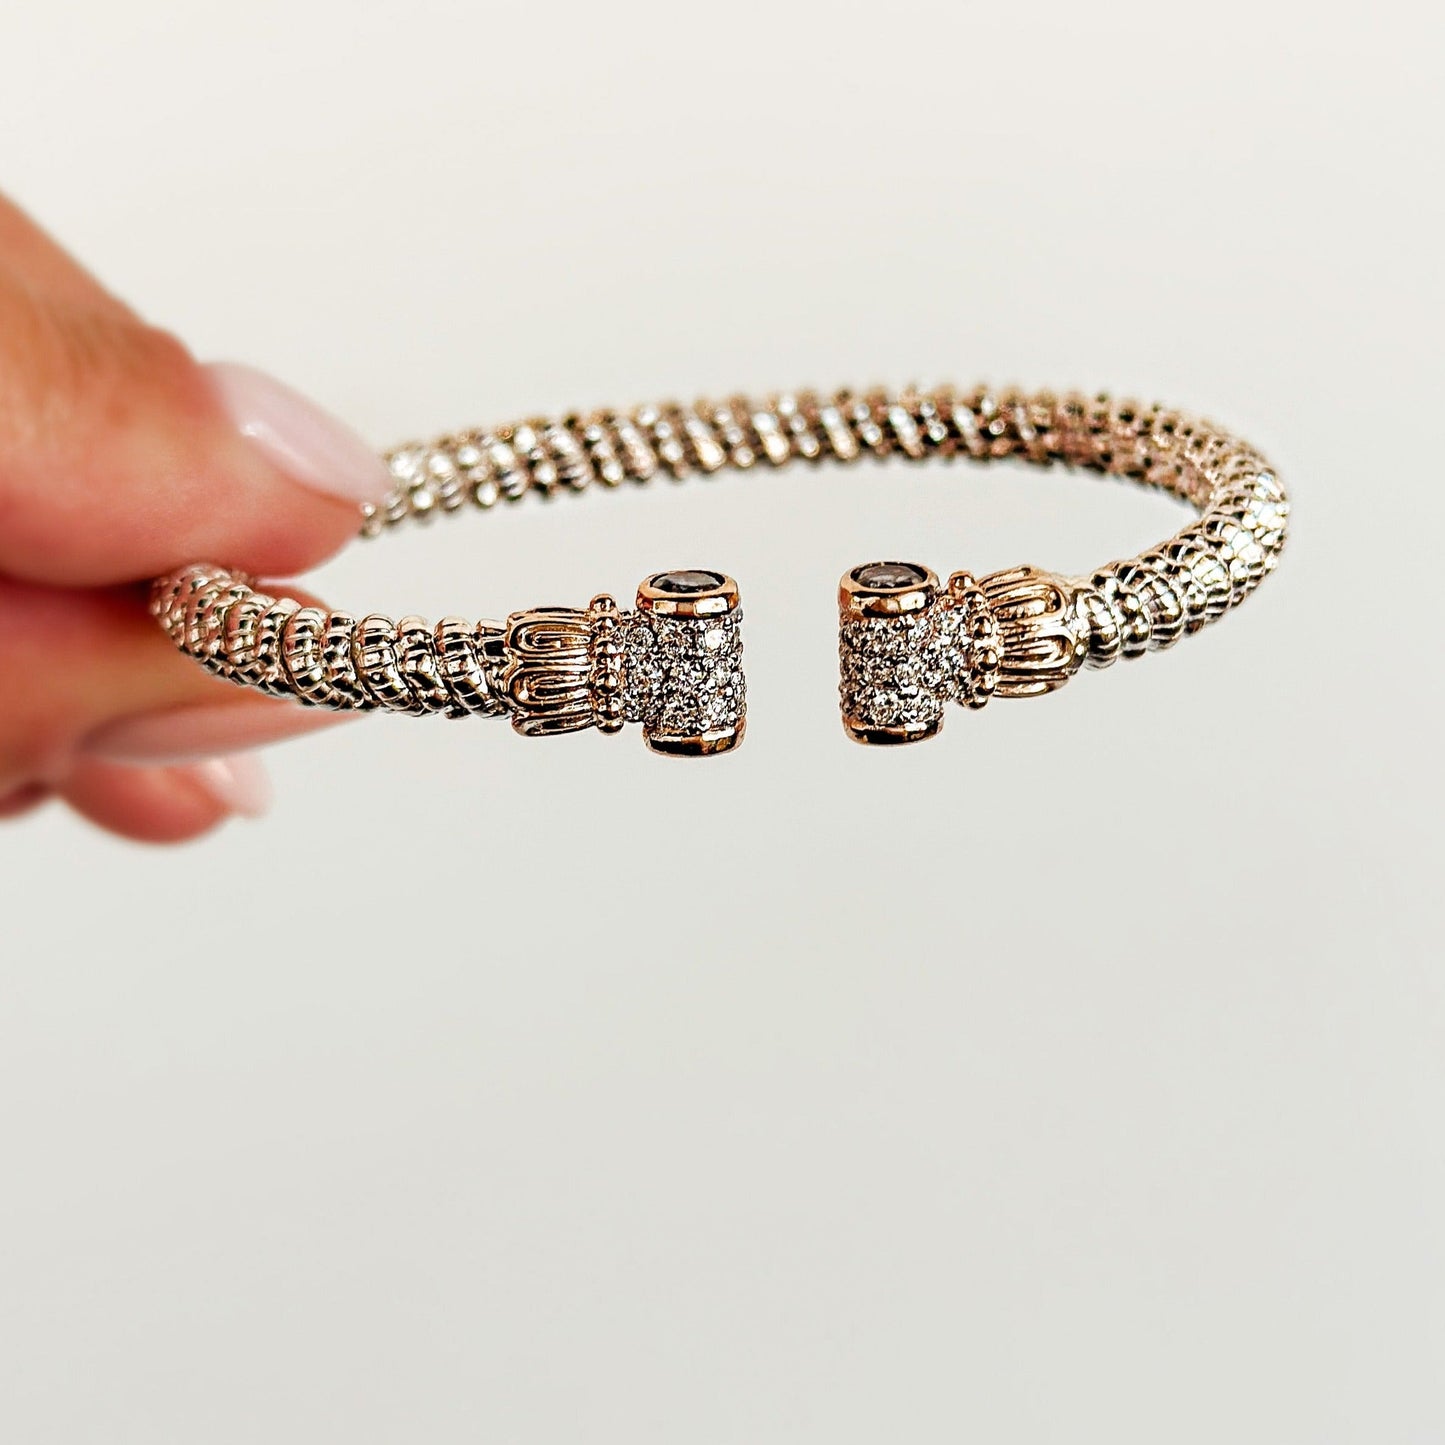 Vahan 14K Gold & Sterling Silver Bracelet with Diamonds 23678DIO04